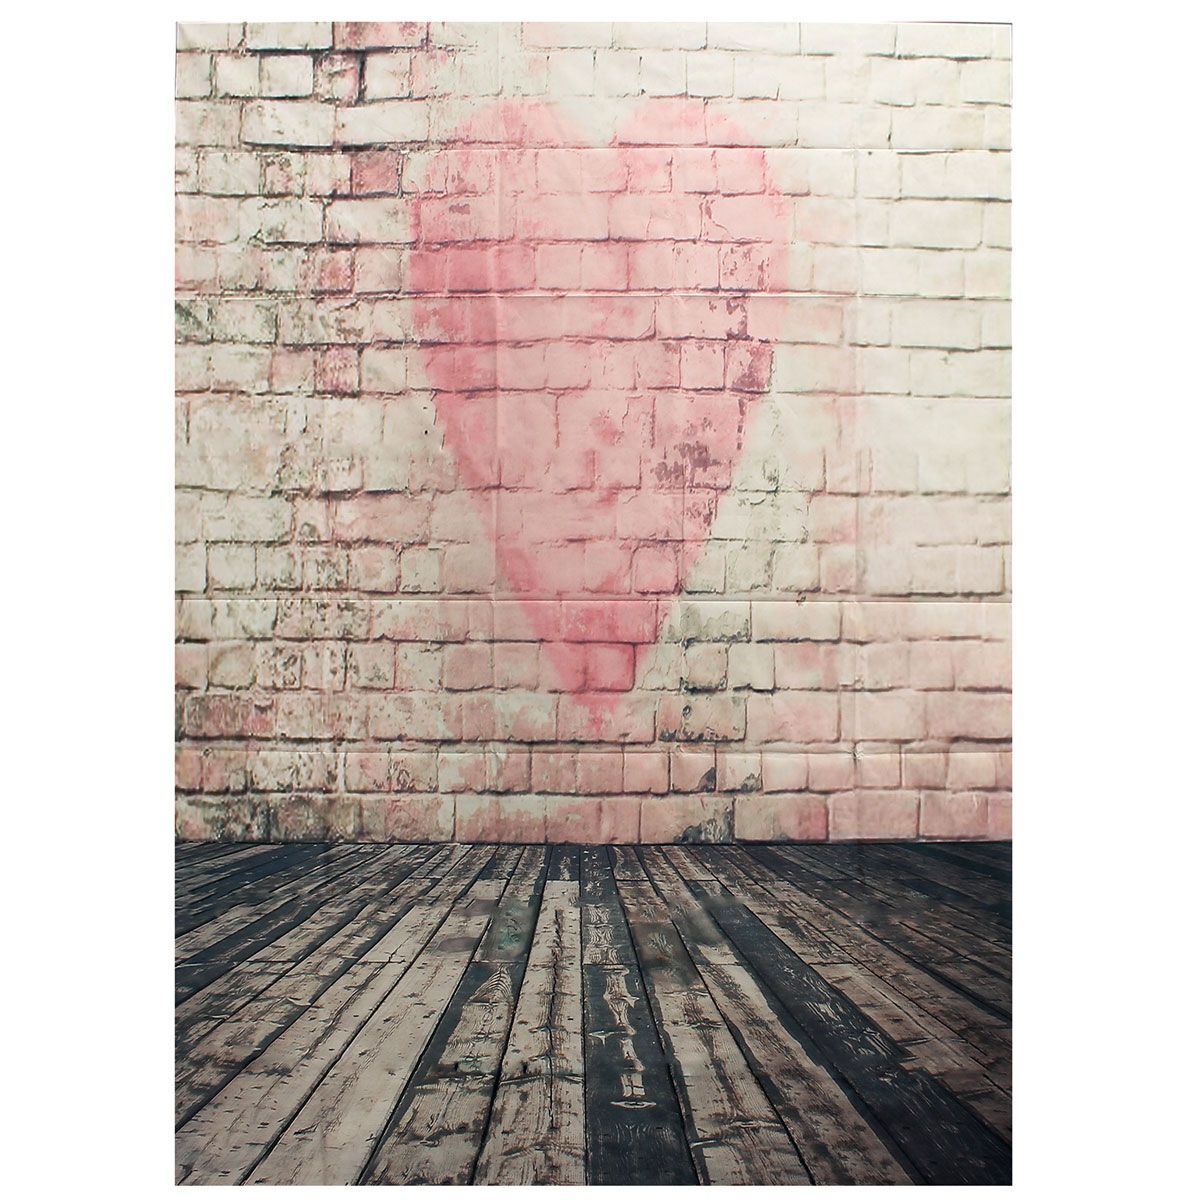 5x7FT-Vinyl-Love-Heart-Brick-Wall-Photography-Background-Backdrops-Photo-Studio-1168459